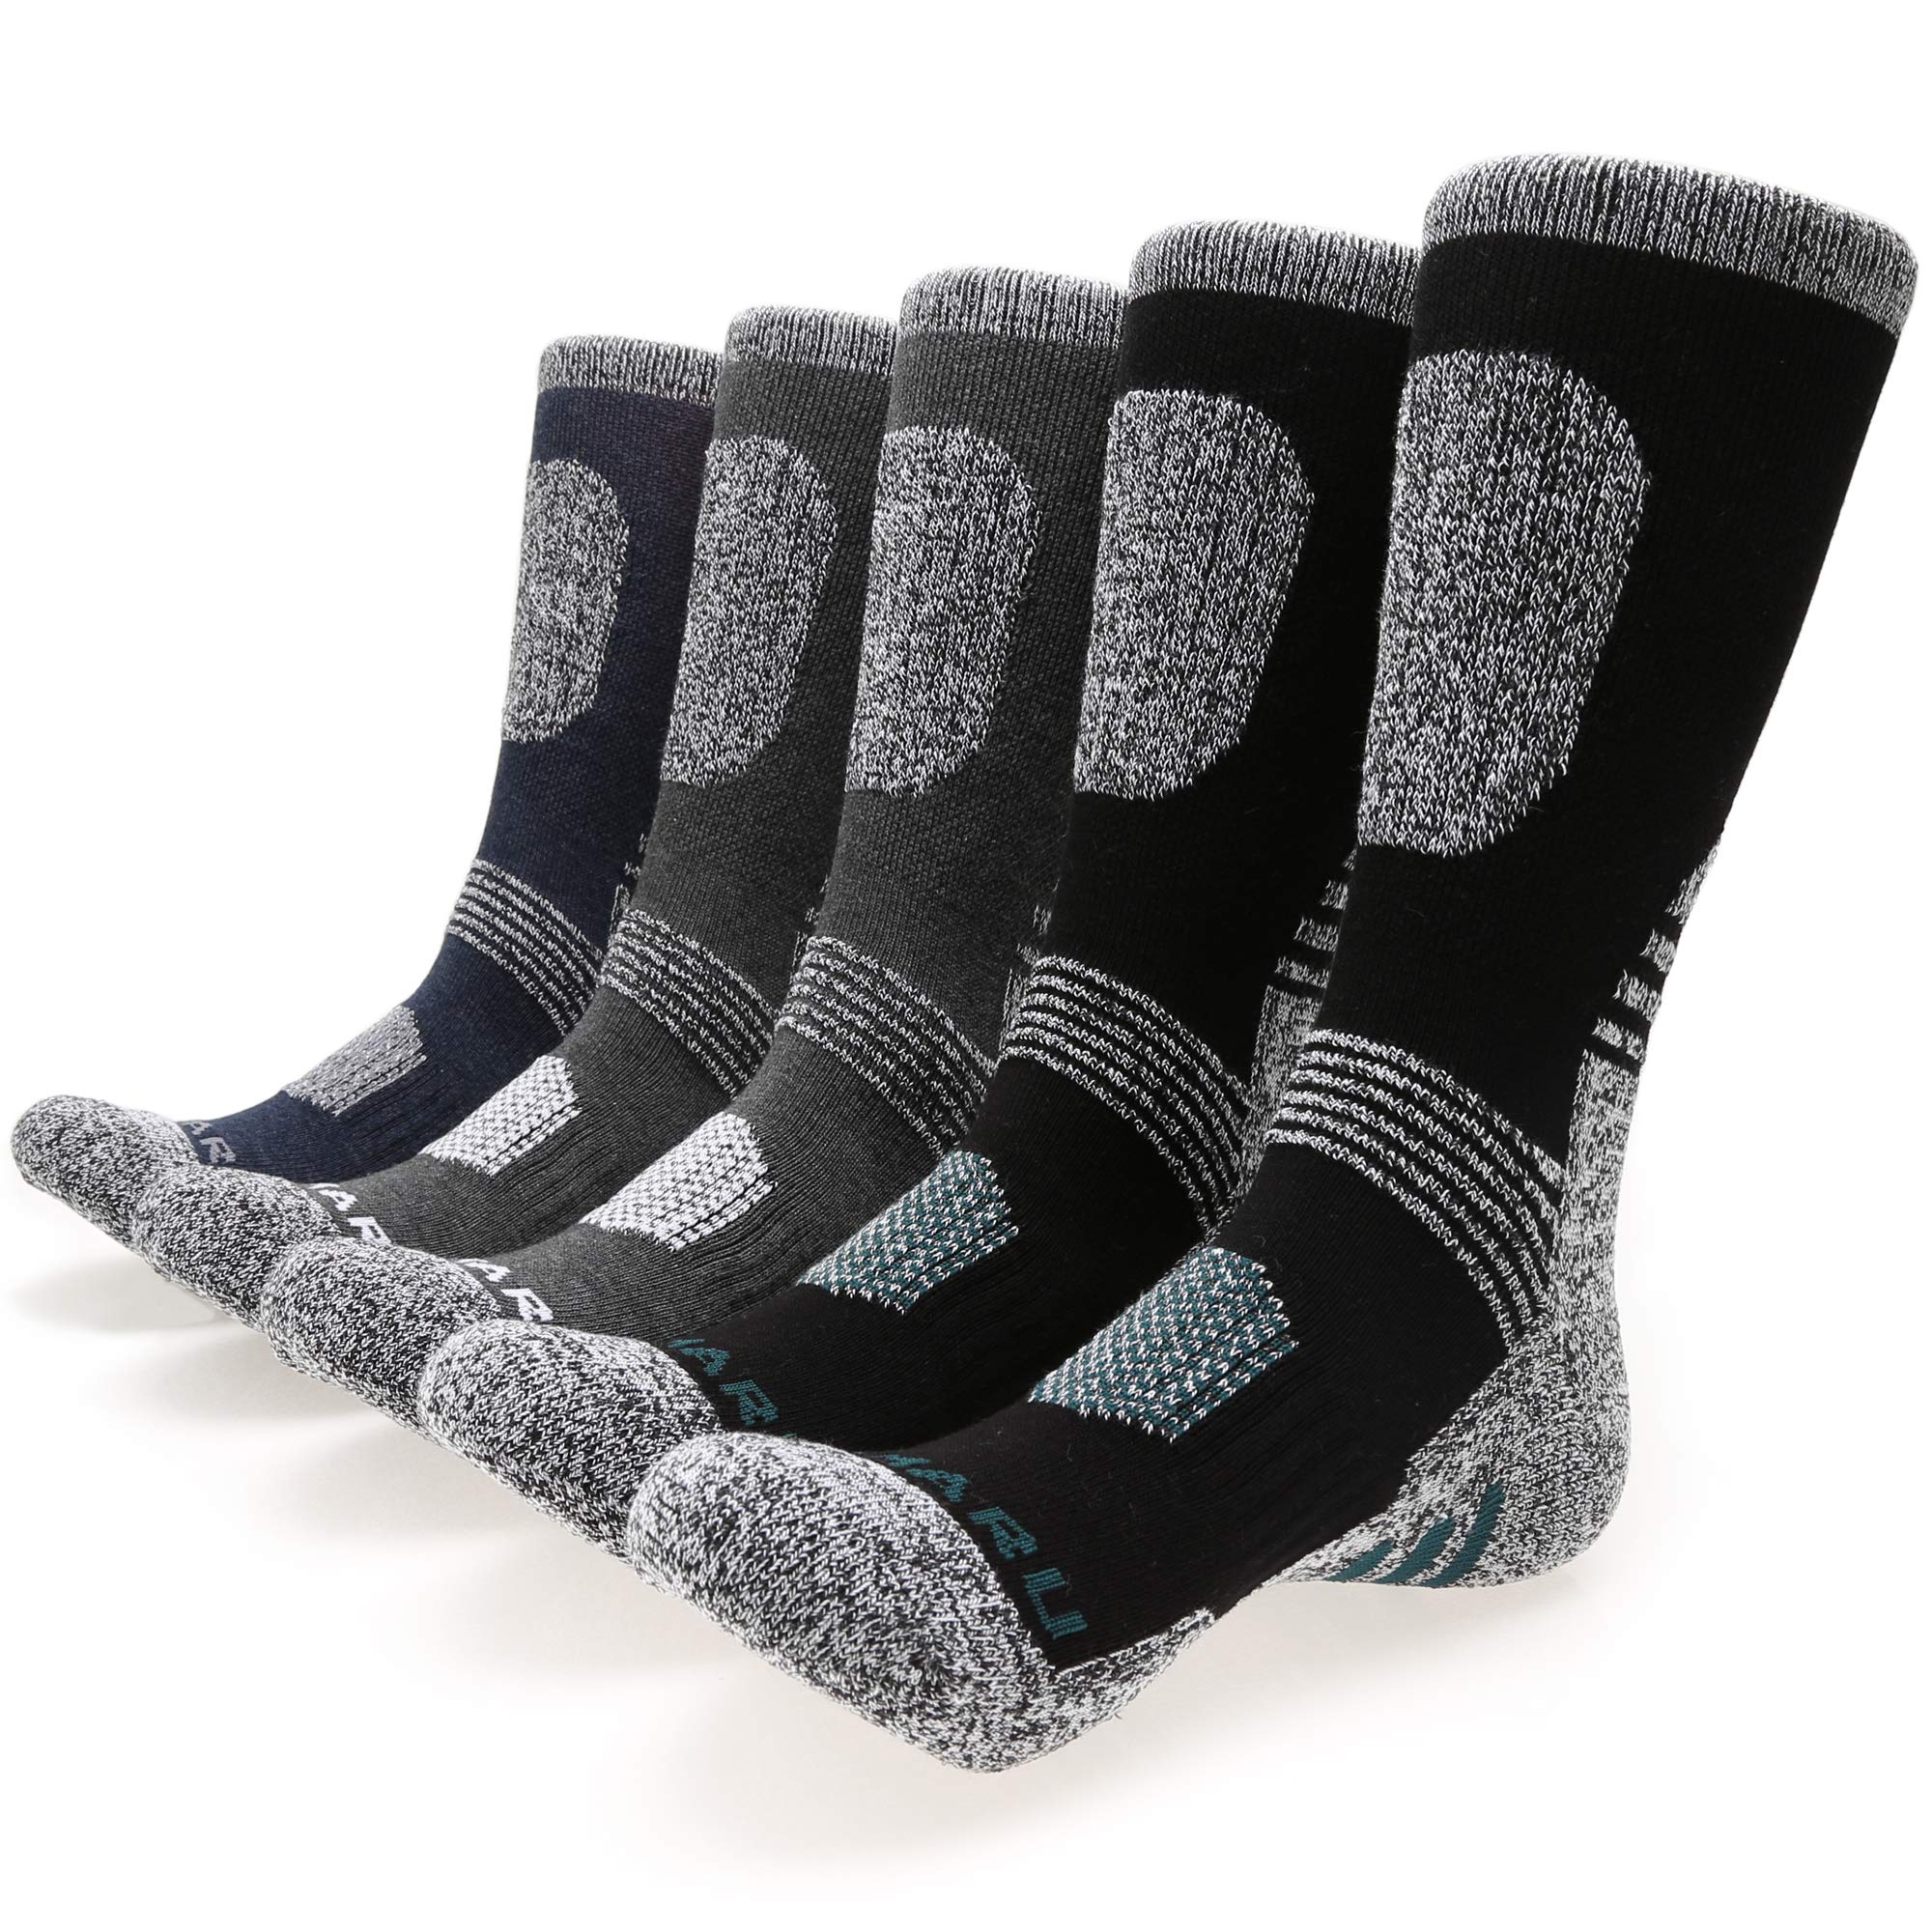 MIRMARU Men’s 5 Pairs Hiking Socks- Multi Performance Moisture Wicking Outdoor Sports Hiking Crew Socks (M251-LARGE)